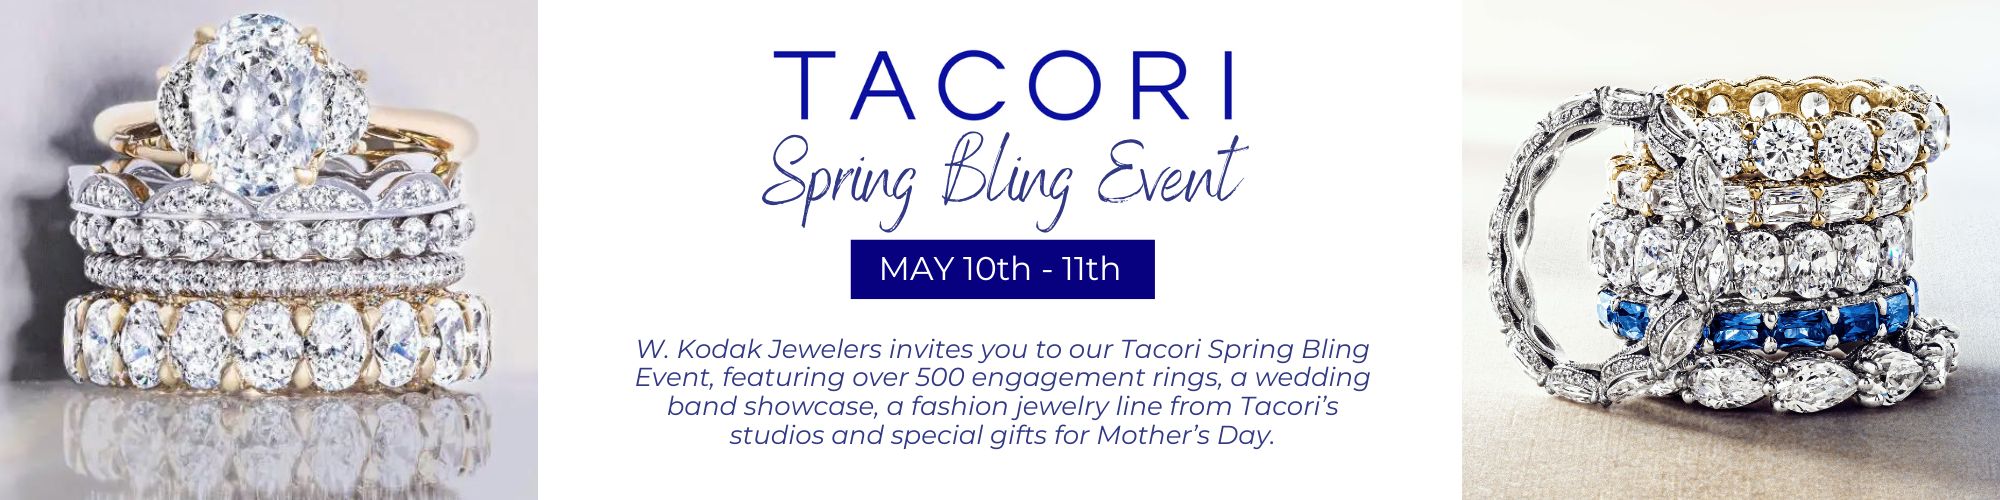 Tacori Spring Bling Event